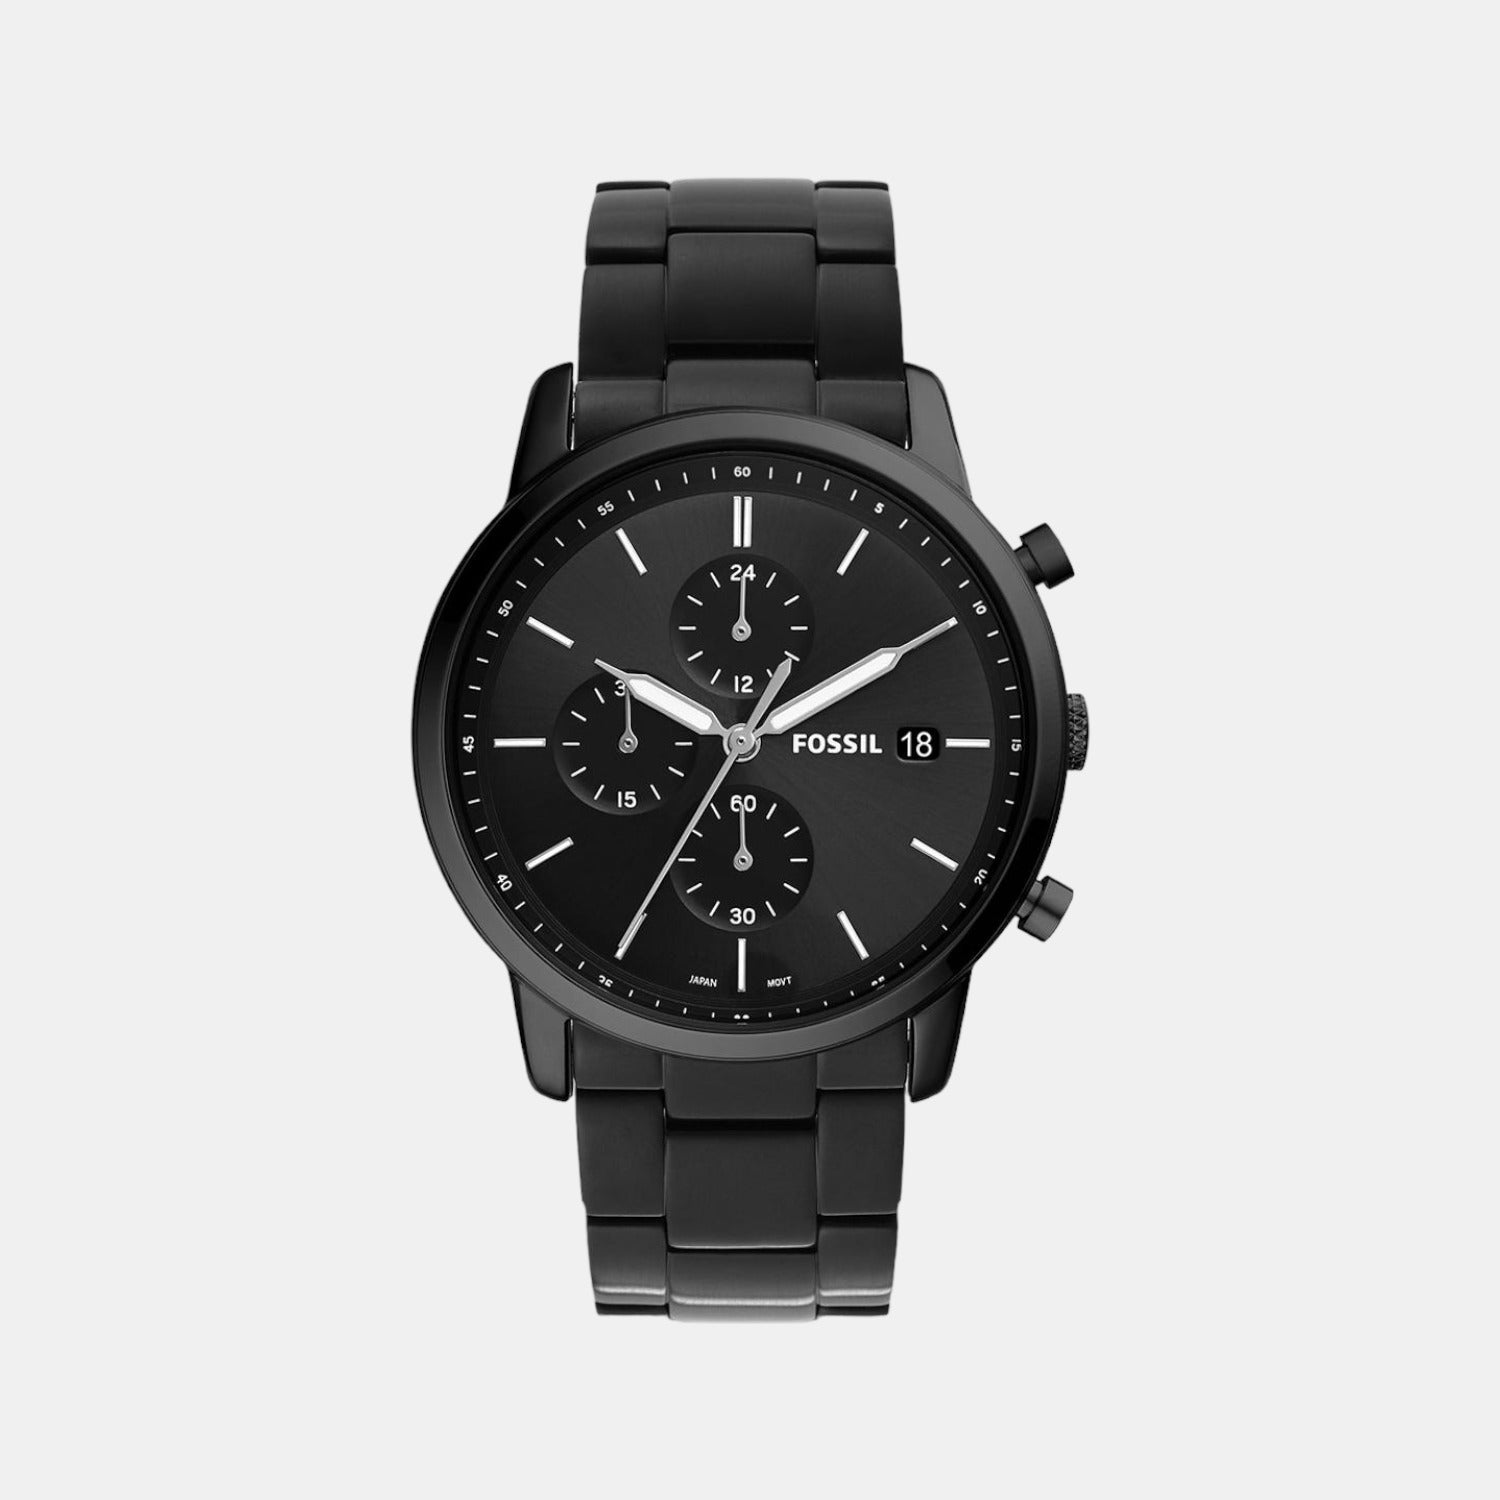 OVERFLY Megir Black Luxury Chronograph Watch For-Men(2018)